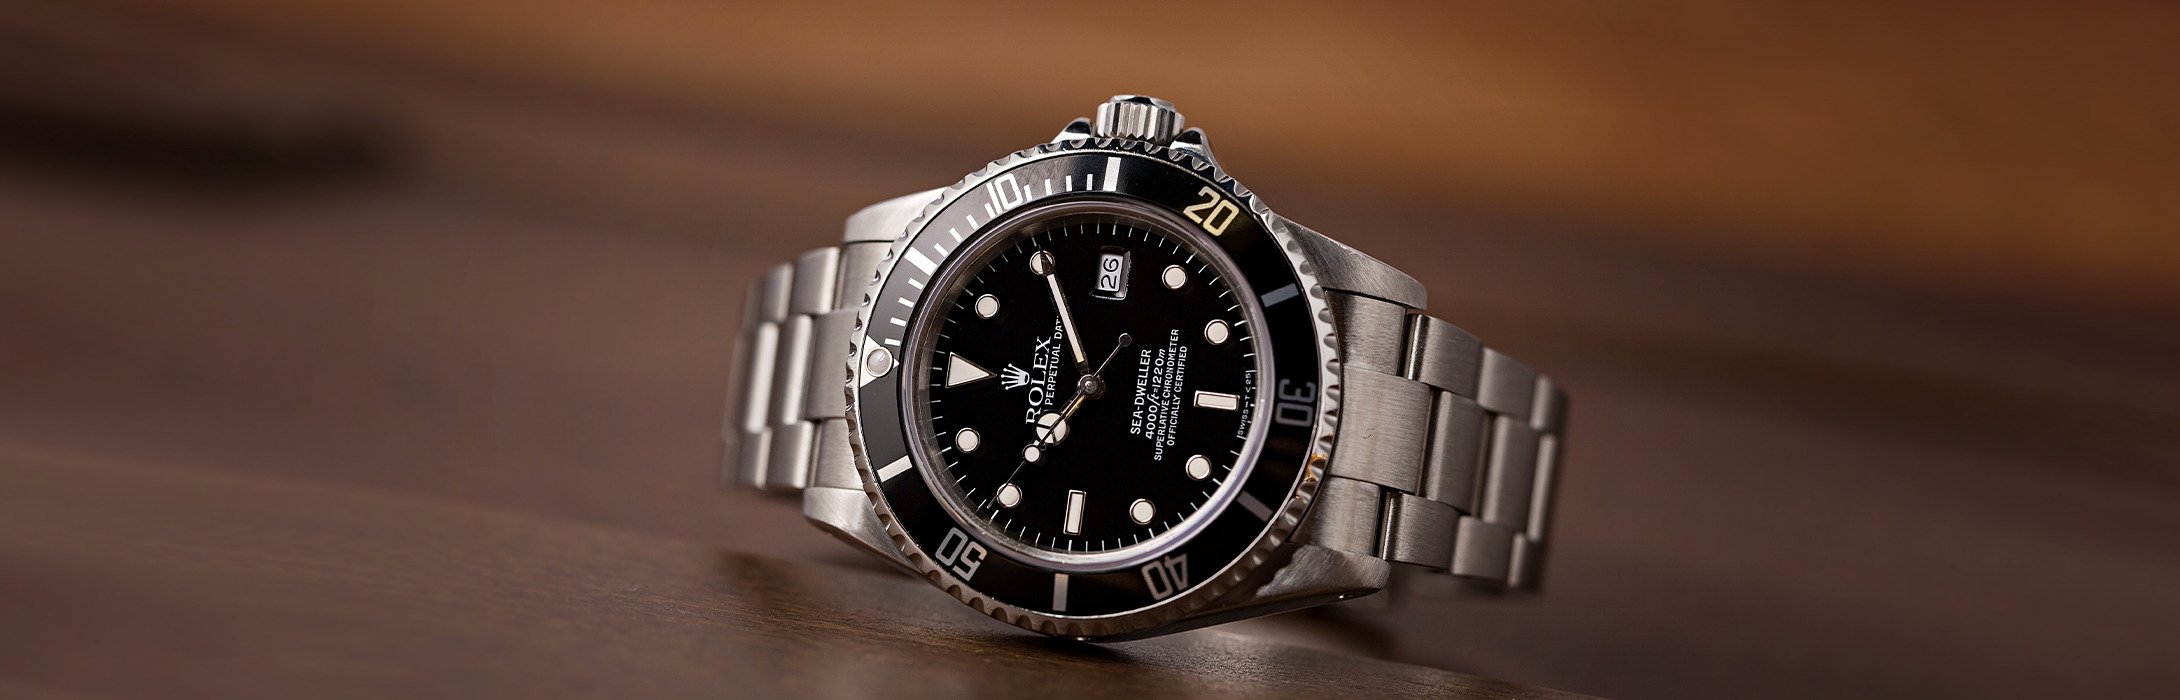 agitation Parametre undergrundsbane Rolex 16600 Sea-Dweller Buying Guide | Bob's Watches